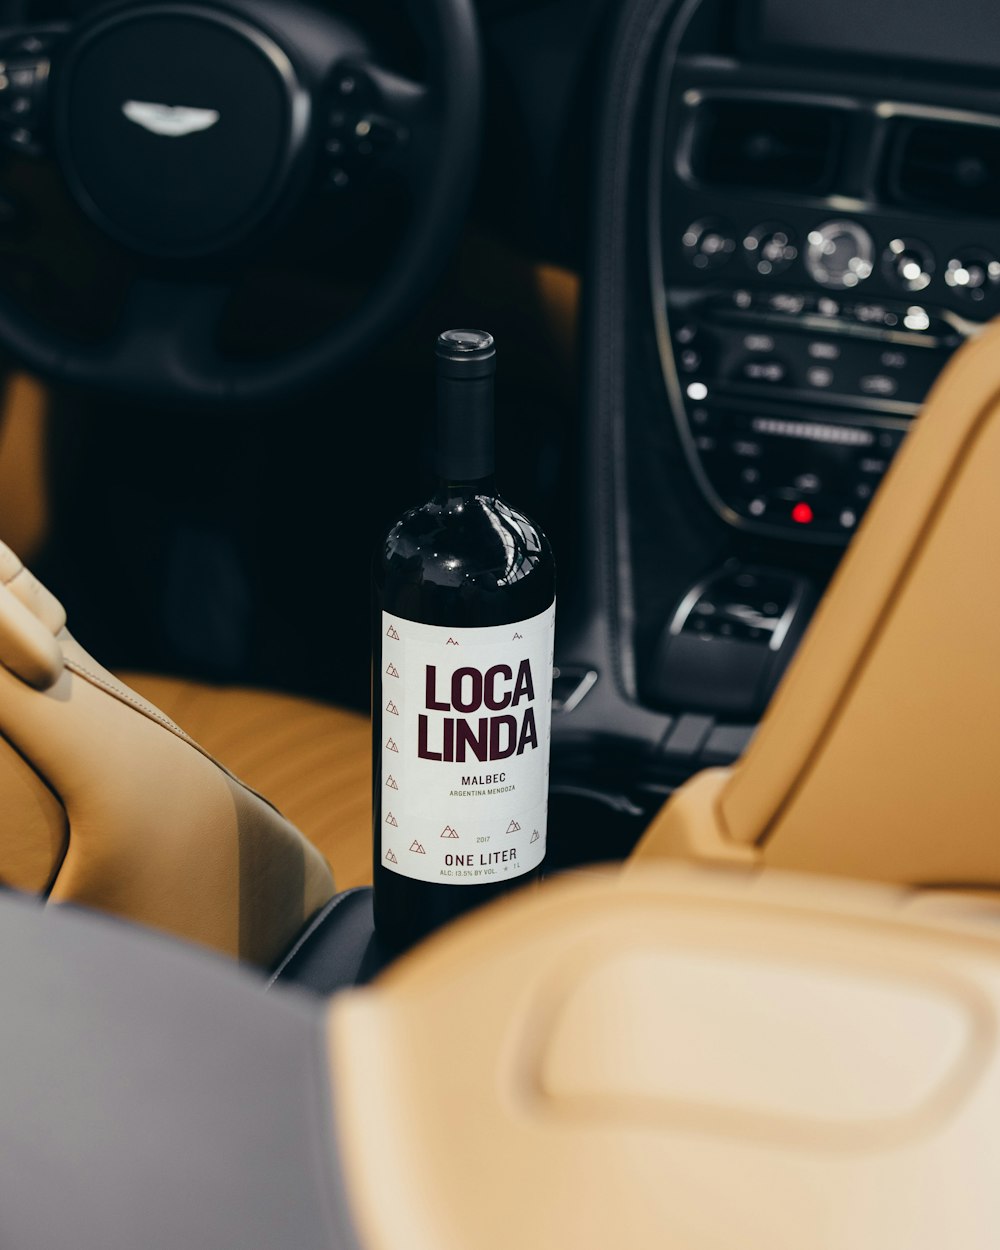 Loca Linda wine bottle on vehicle center console